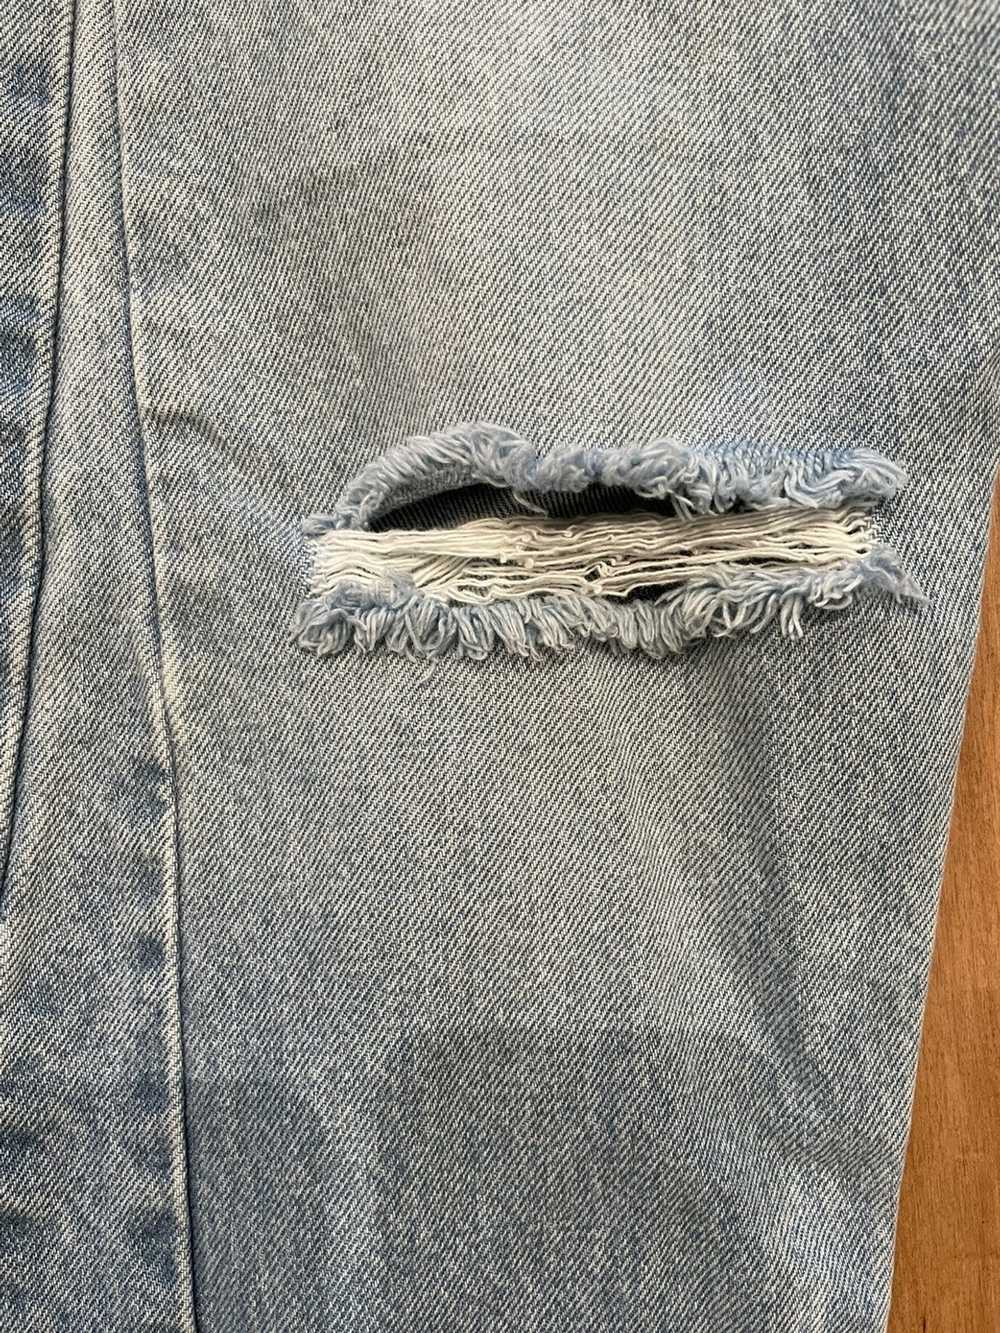 Vintage Vintage Reconstructed Flare Jeans - image 5